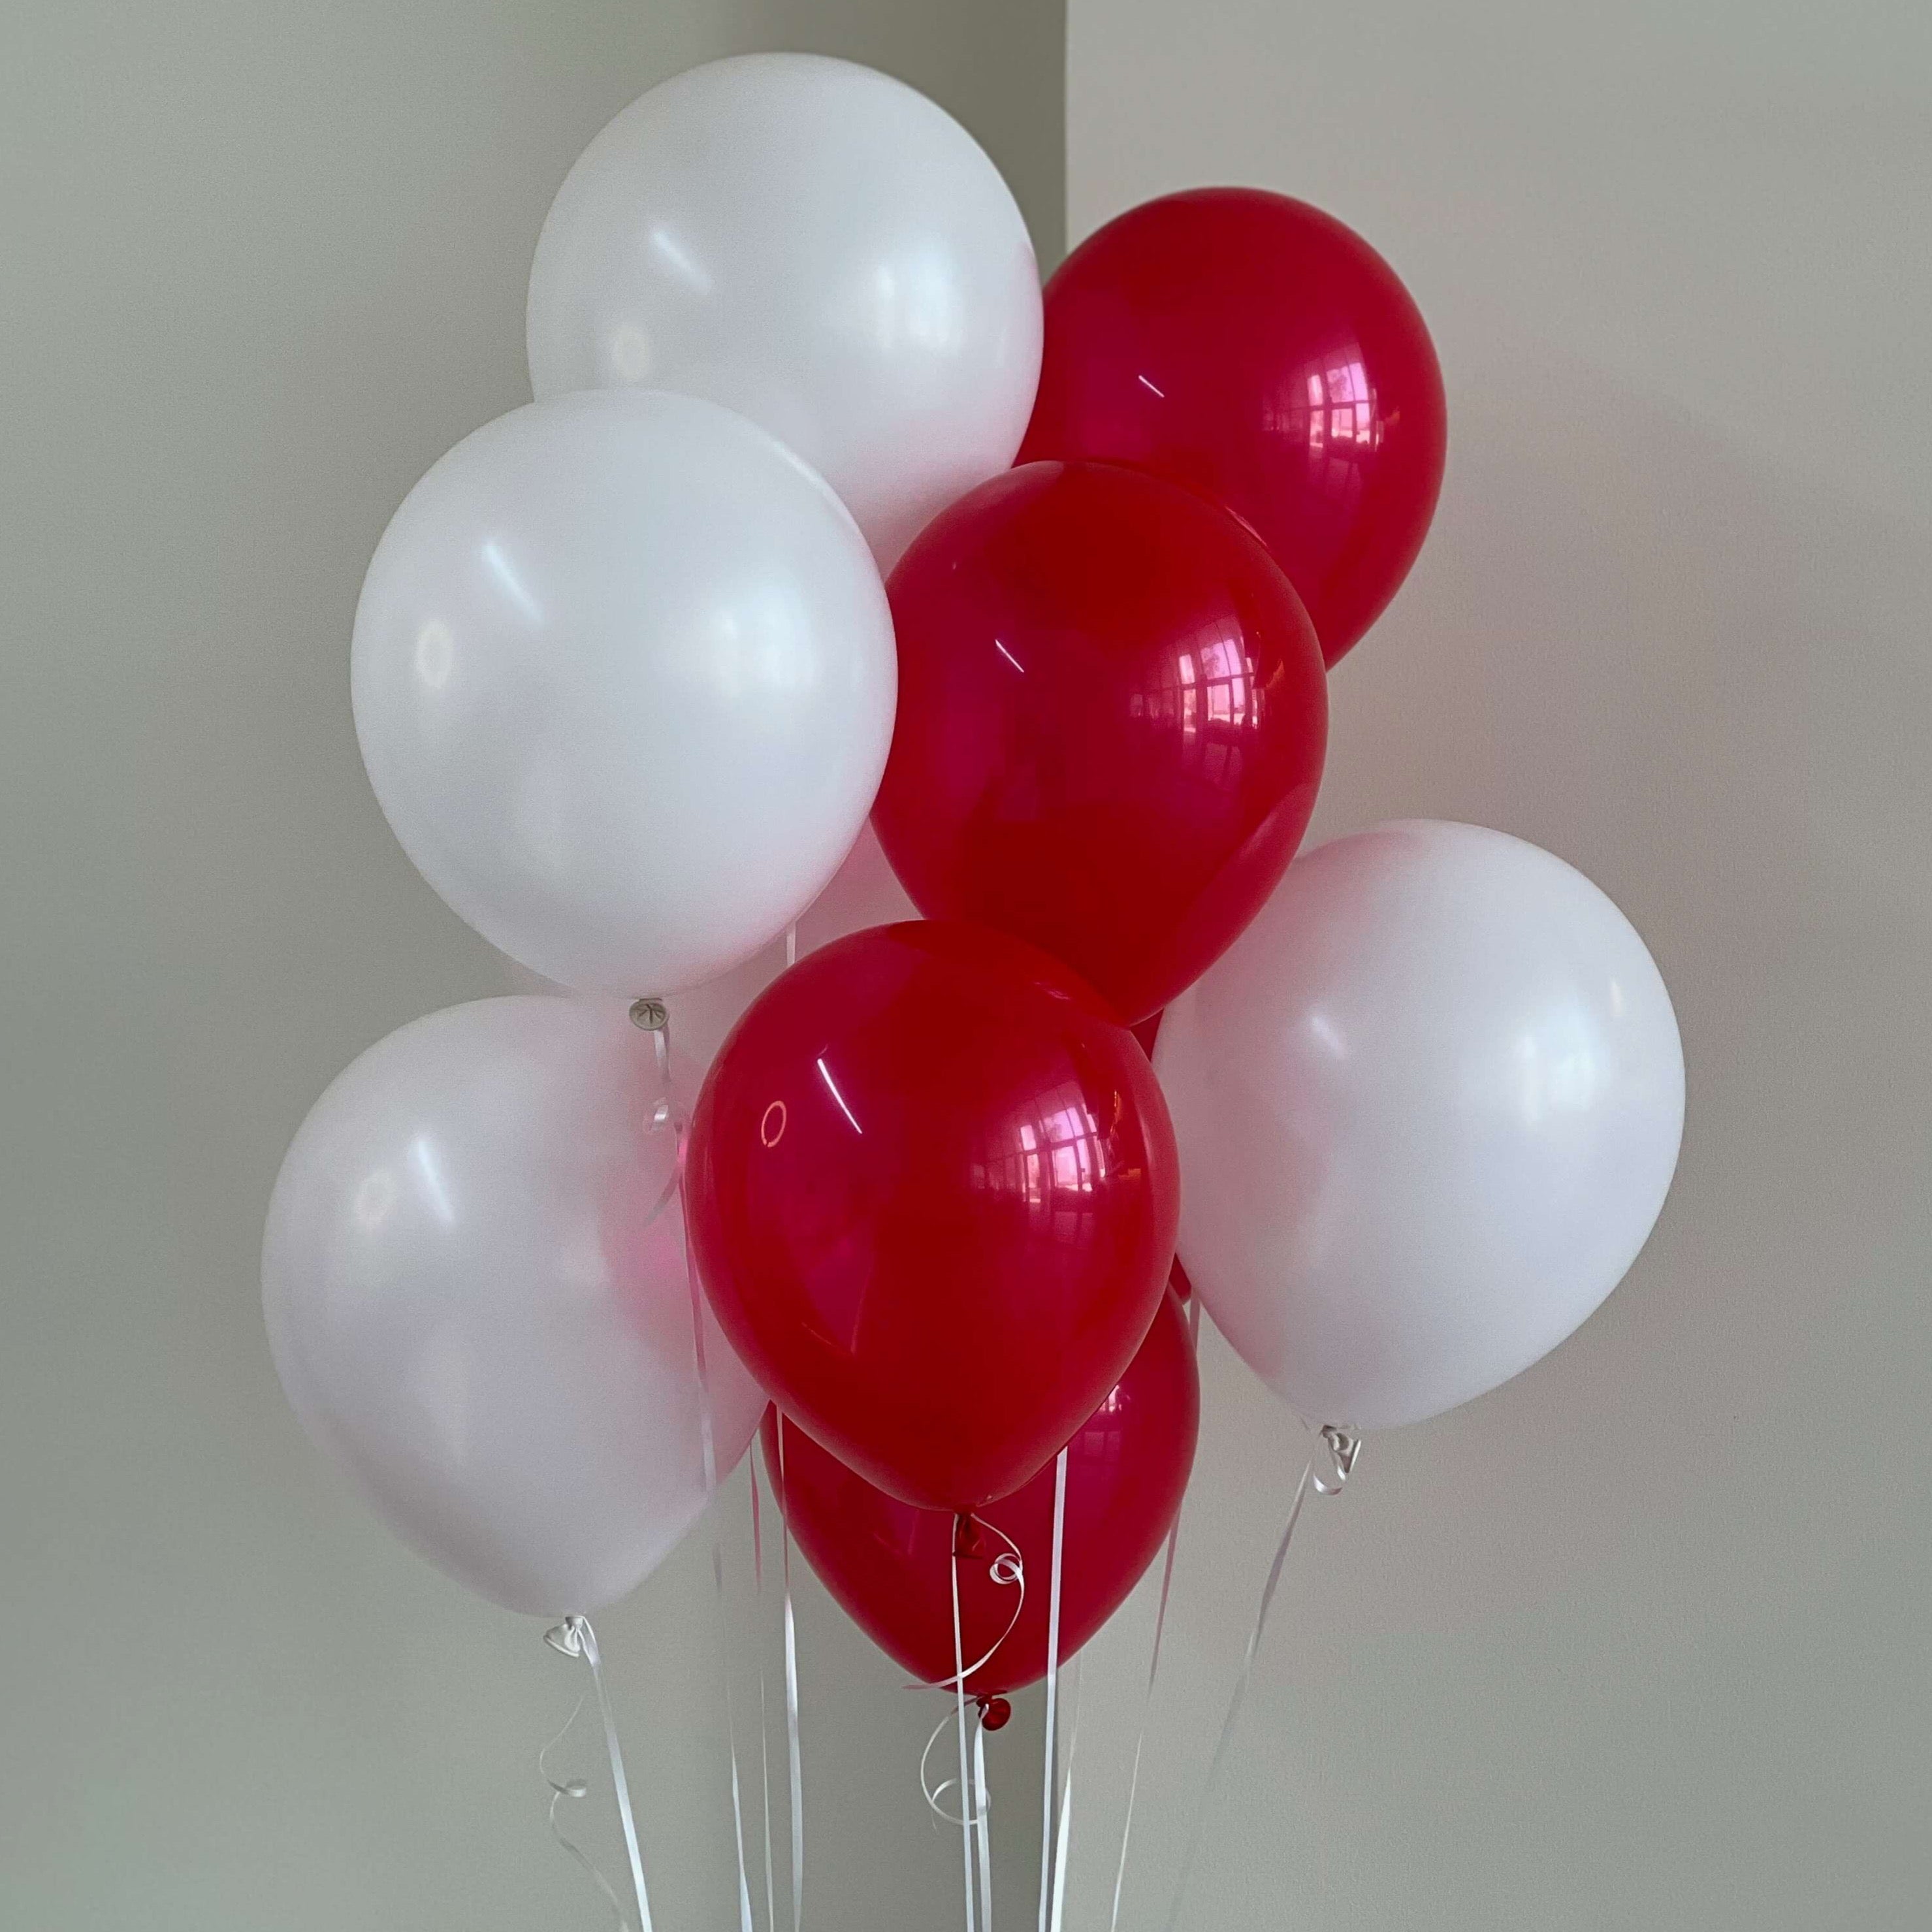 Ten Rubber Balloons